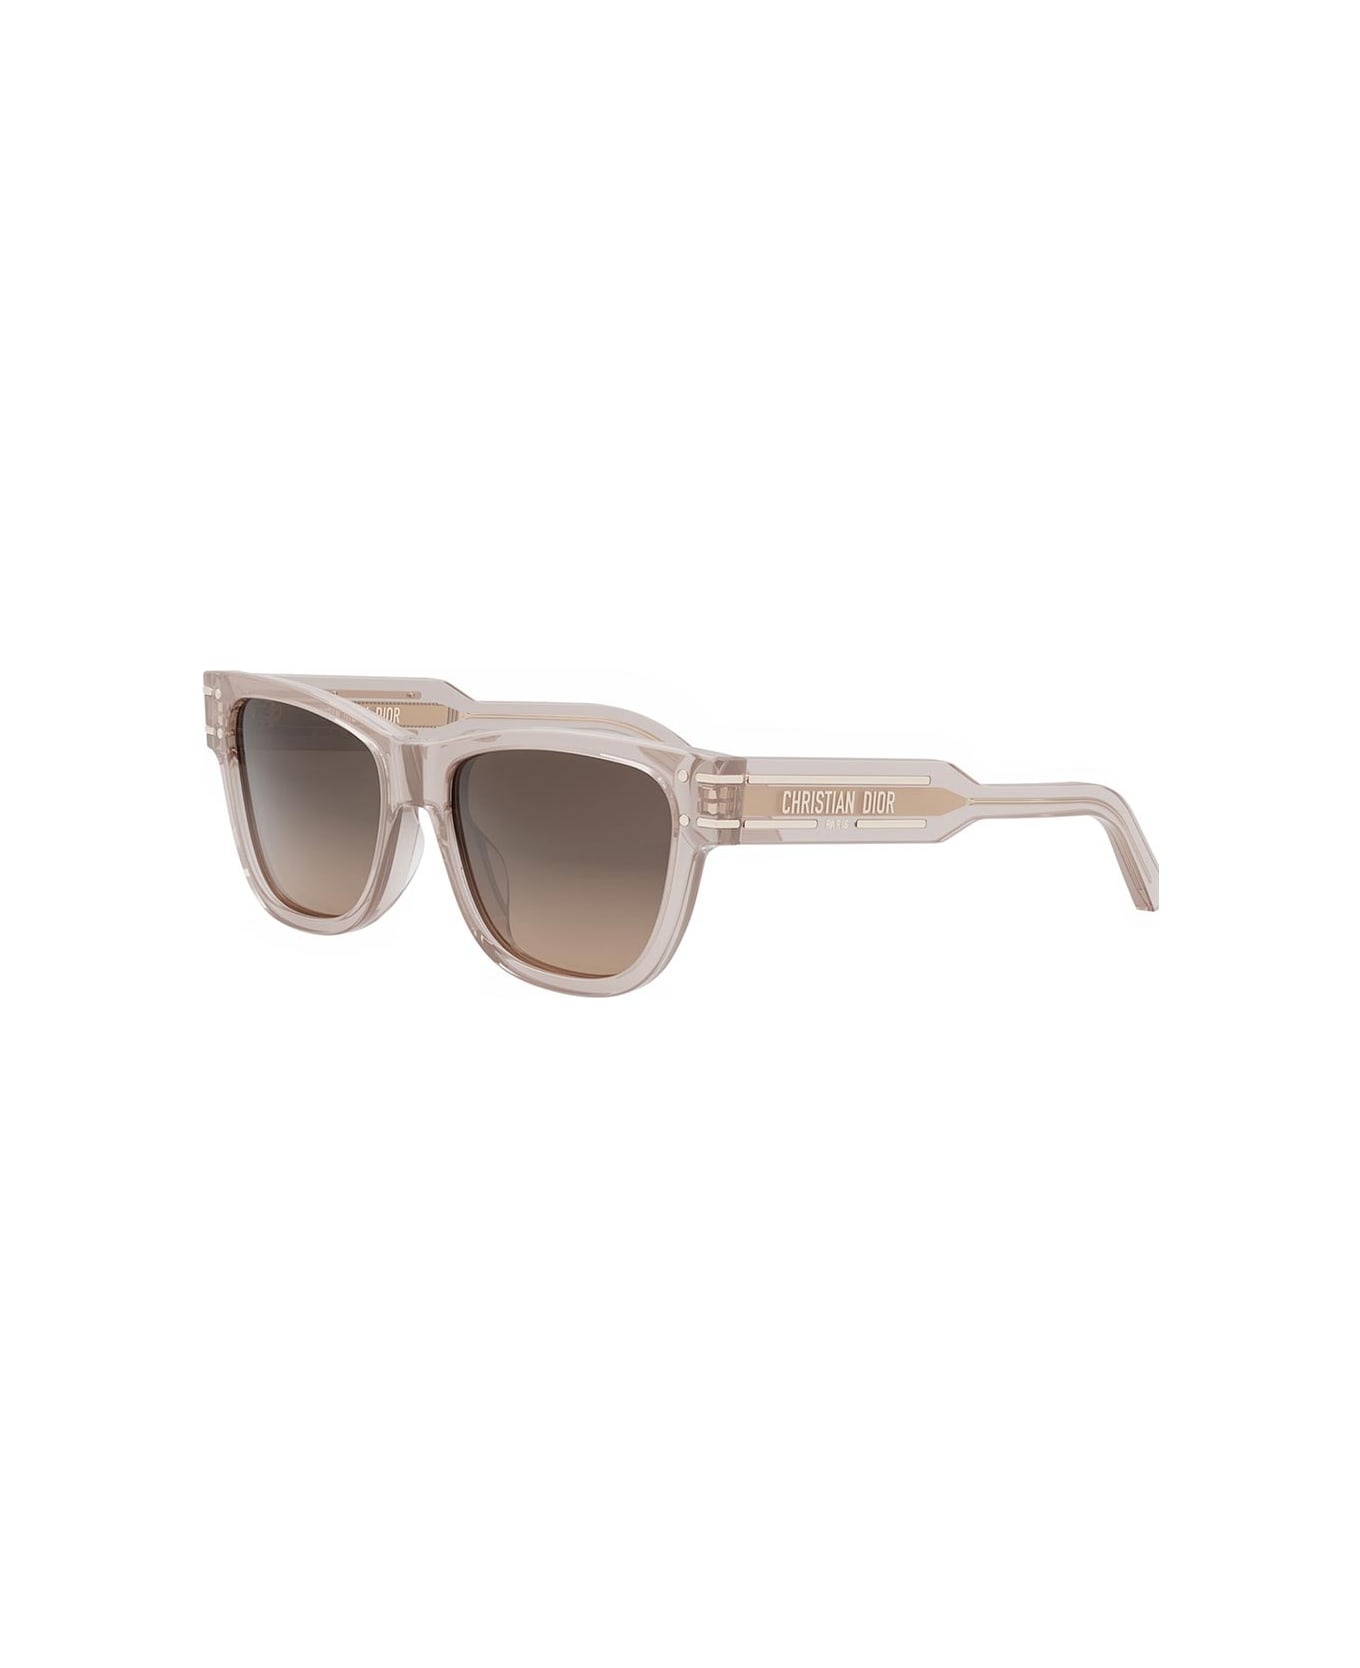 Dior Eyewear Sunglasses - Rosa trasparente/Marrone